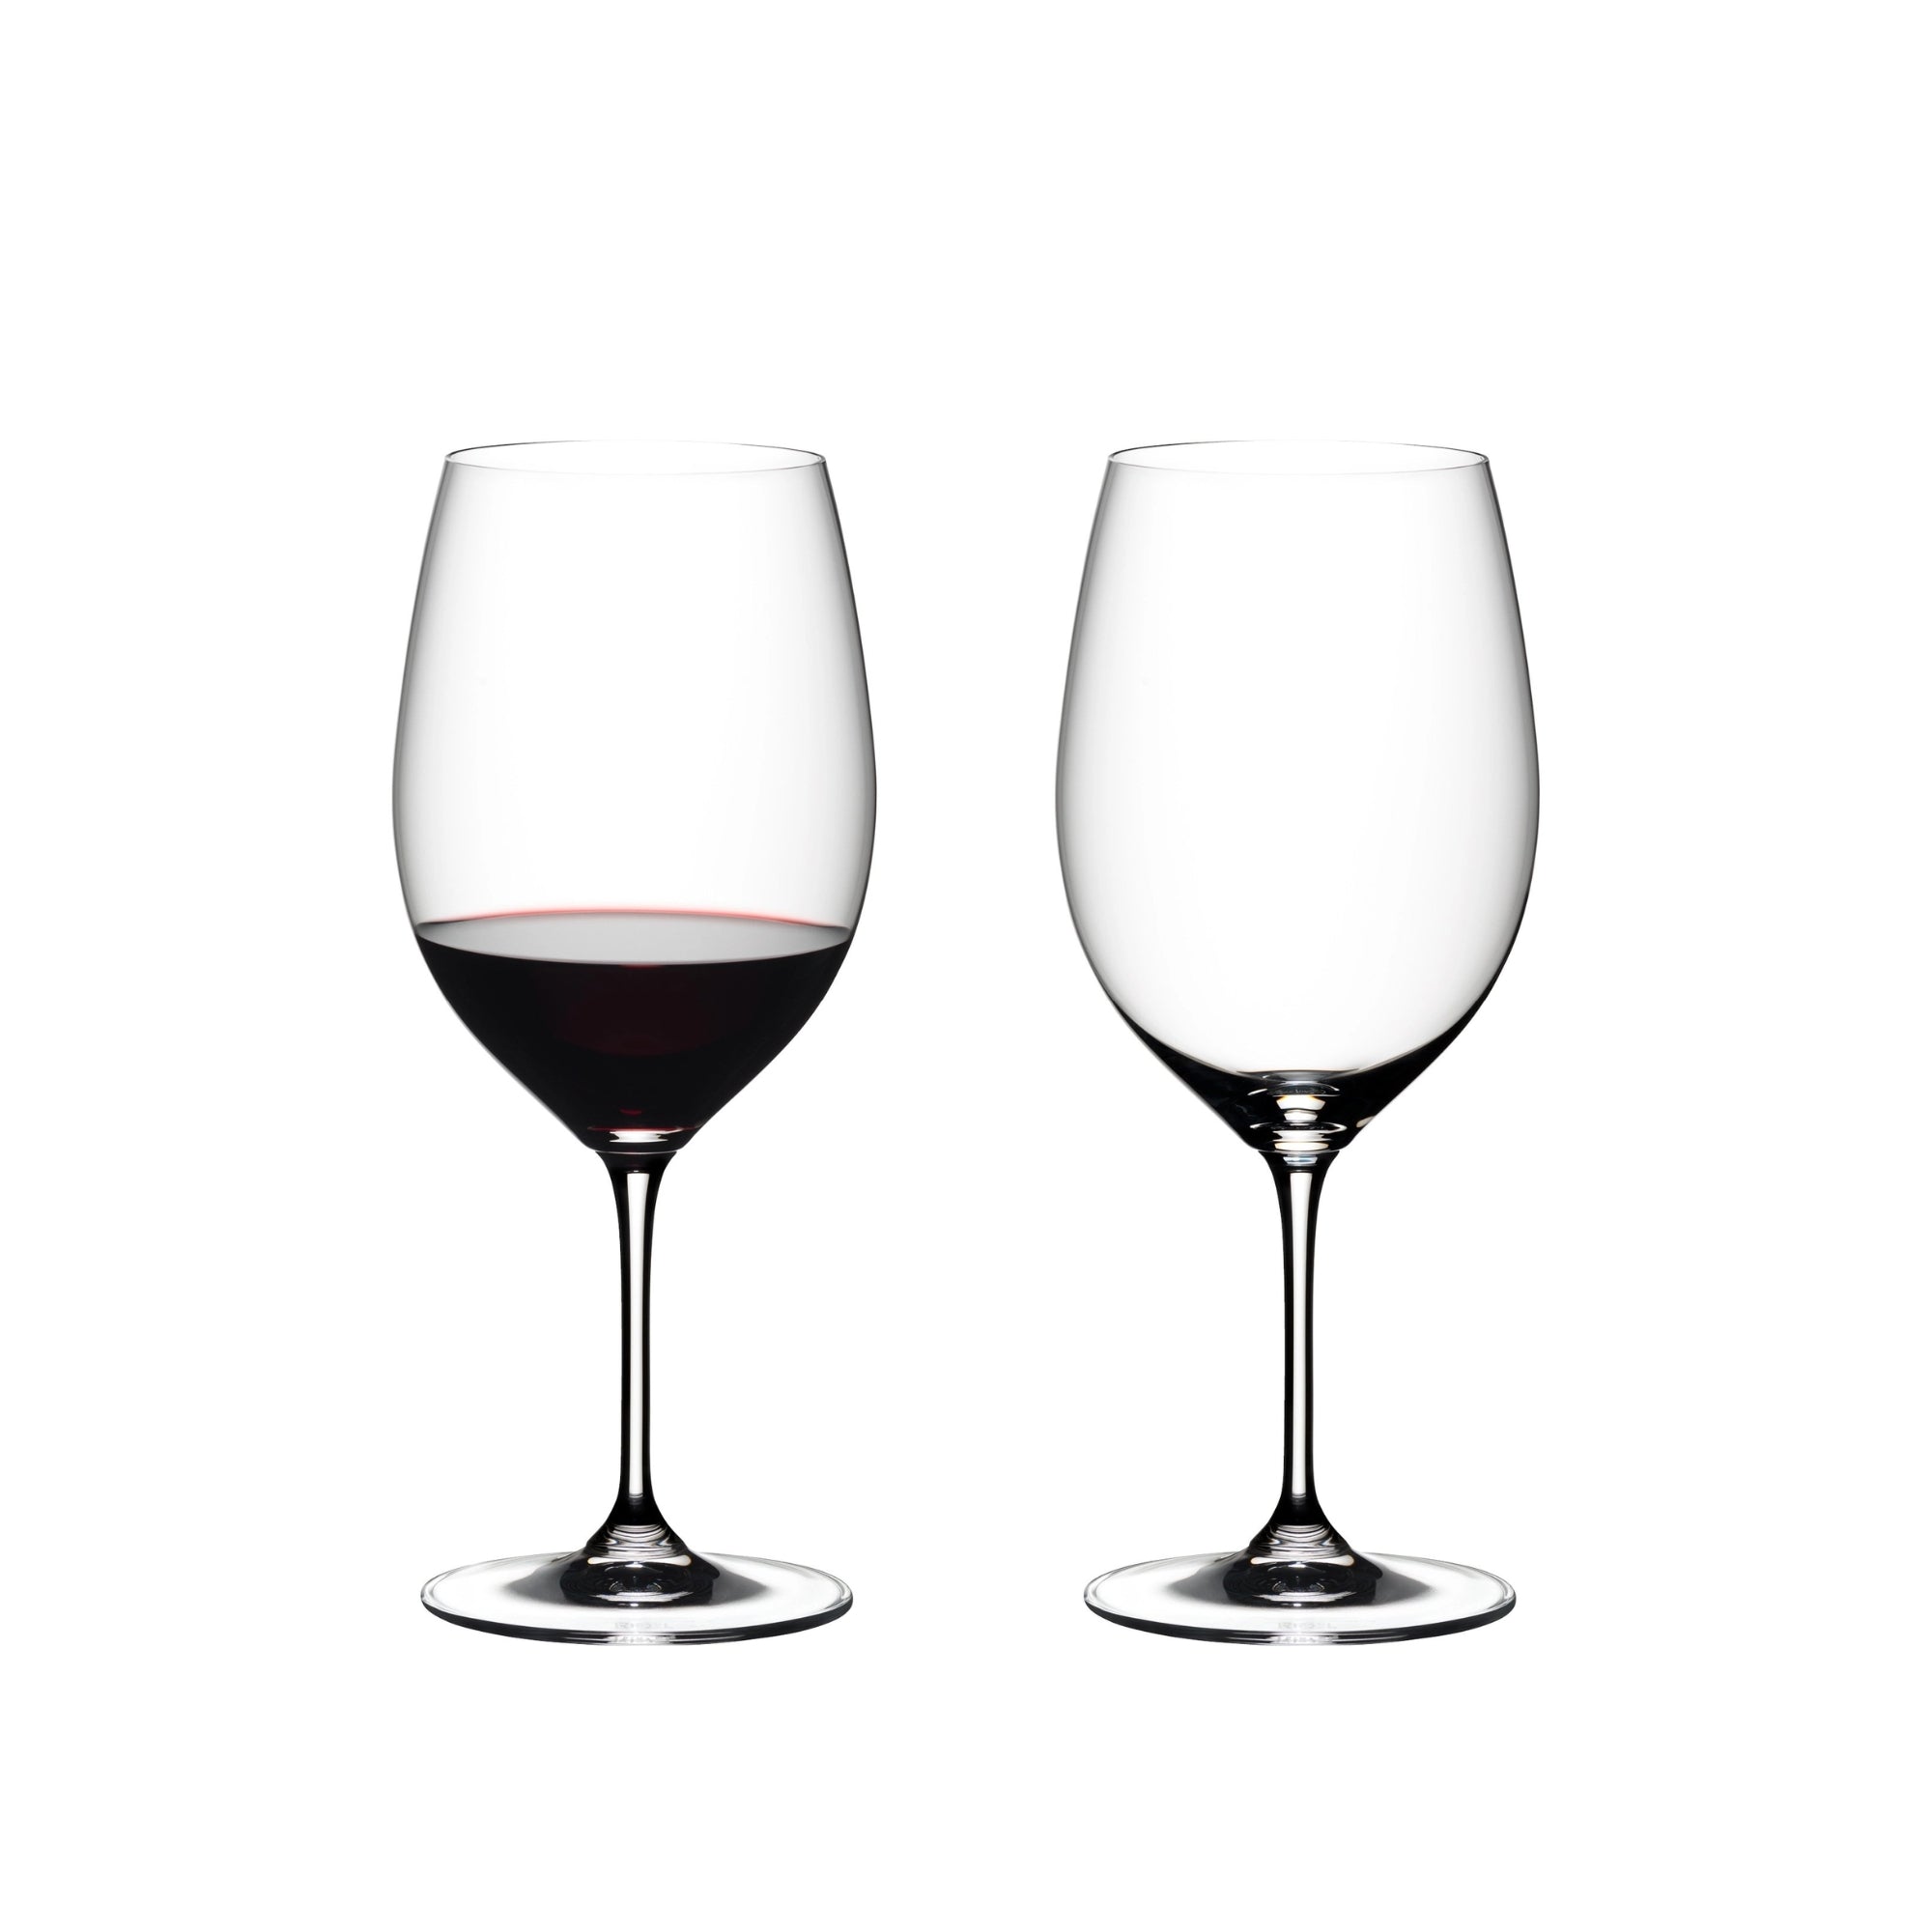 Riedel Vinum Cabernet Sauvignon/Merlot, Set of 2 glasses